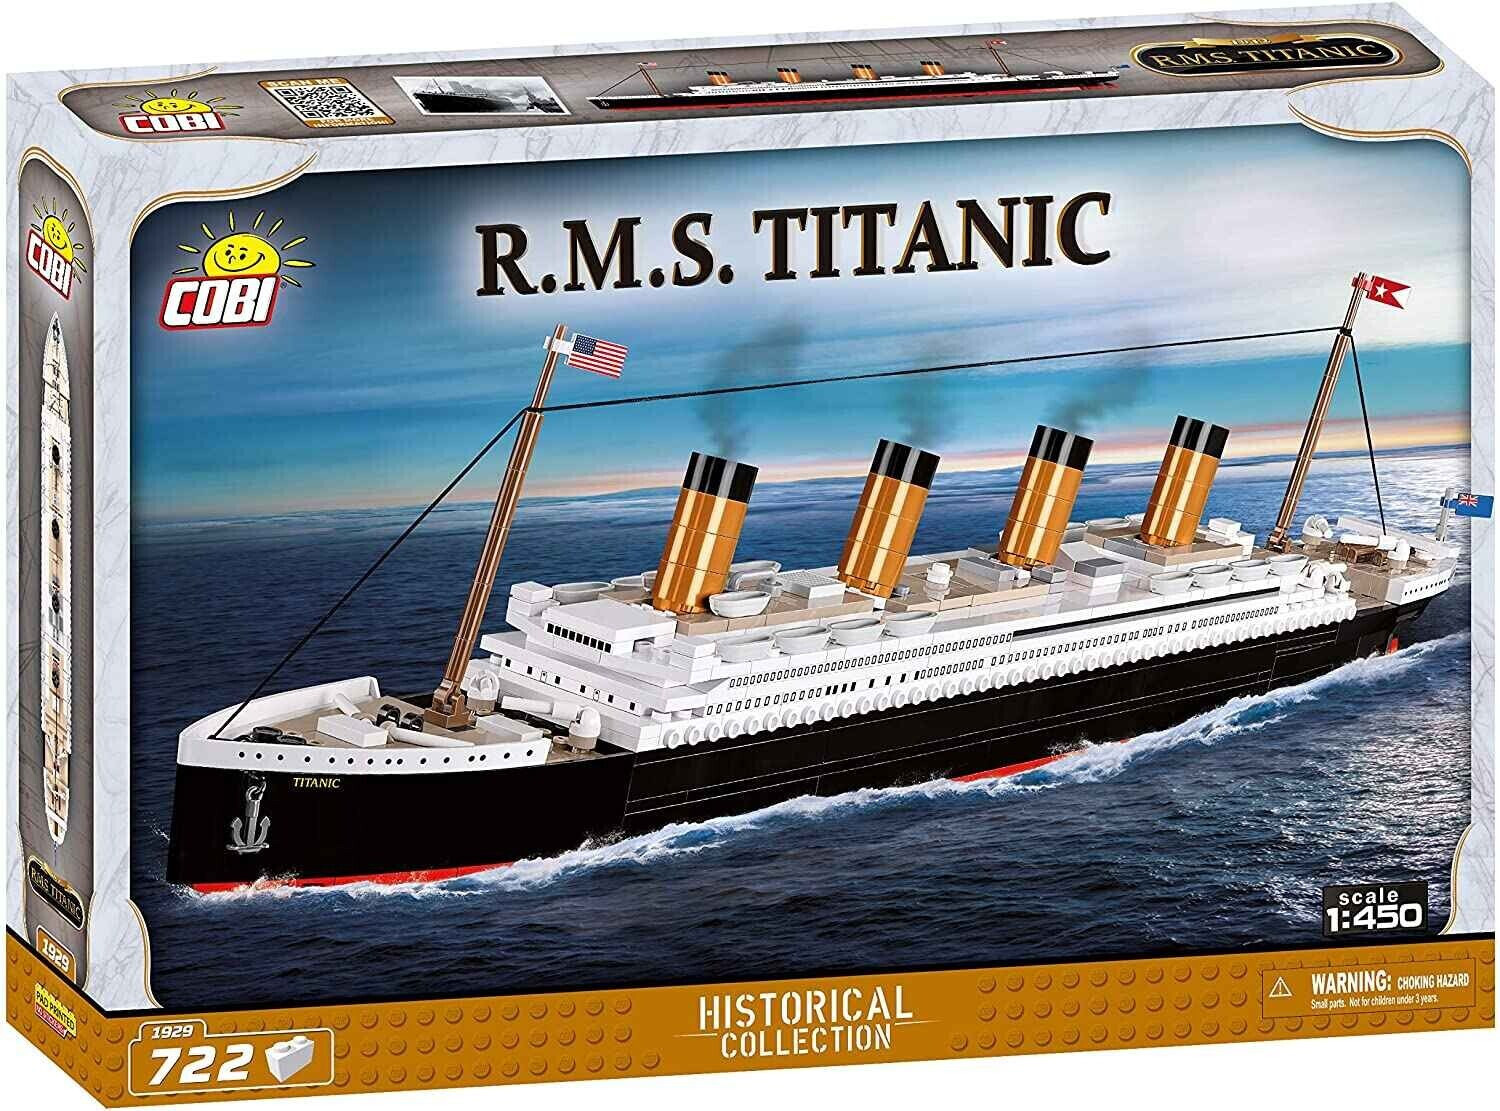 insuficiente Especialidad Pef R.M.S. Titanic. - Qué de juguetes